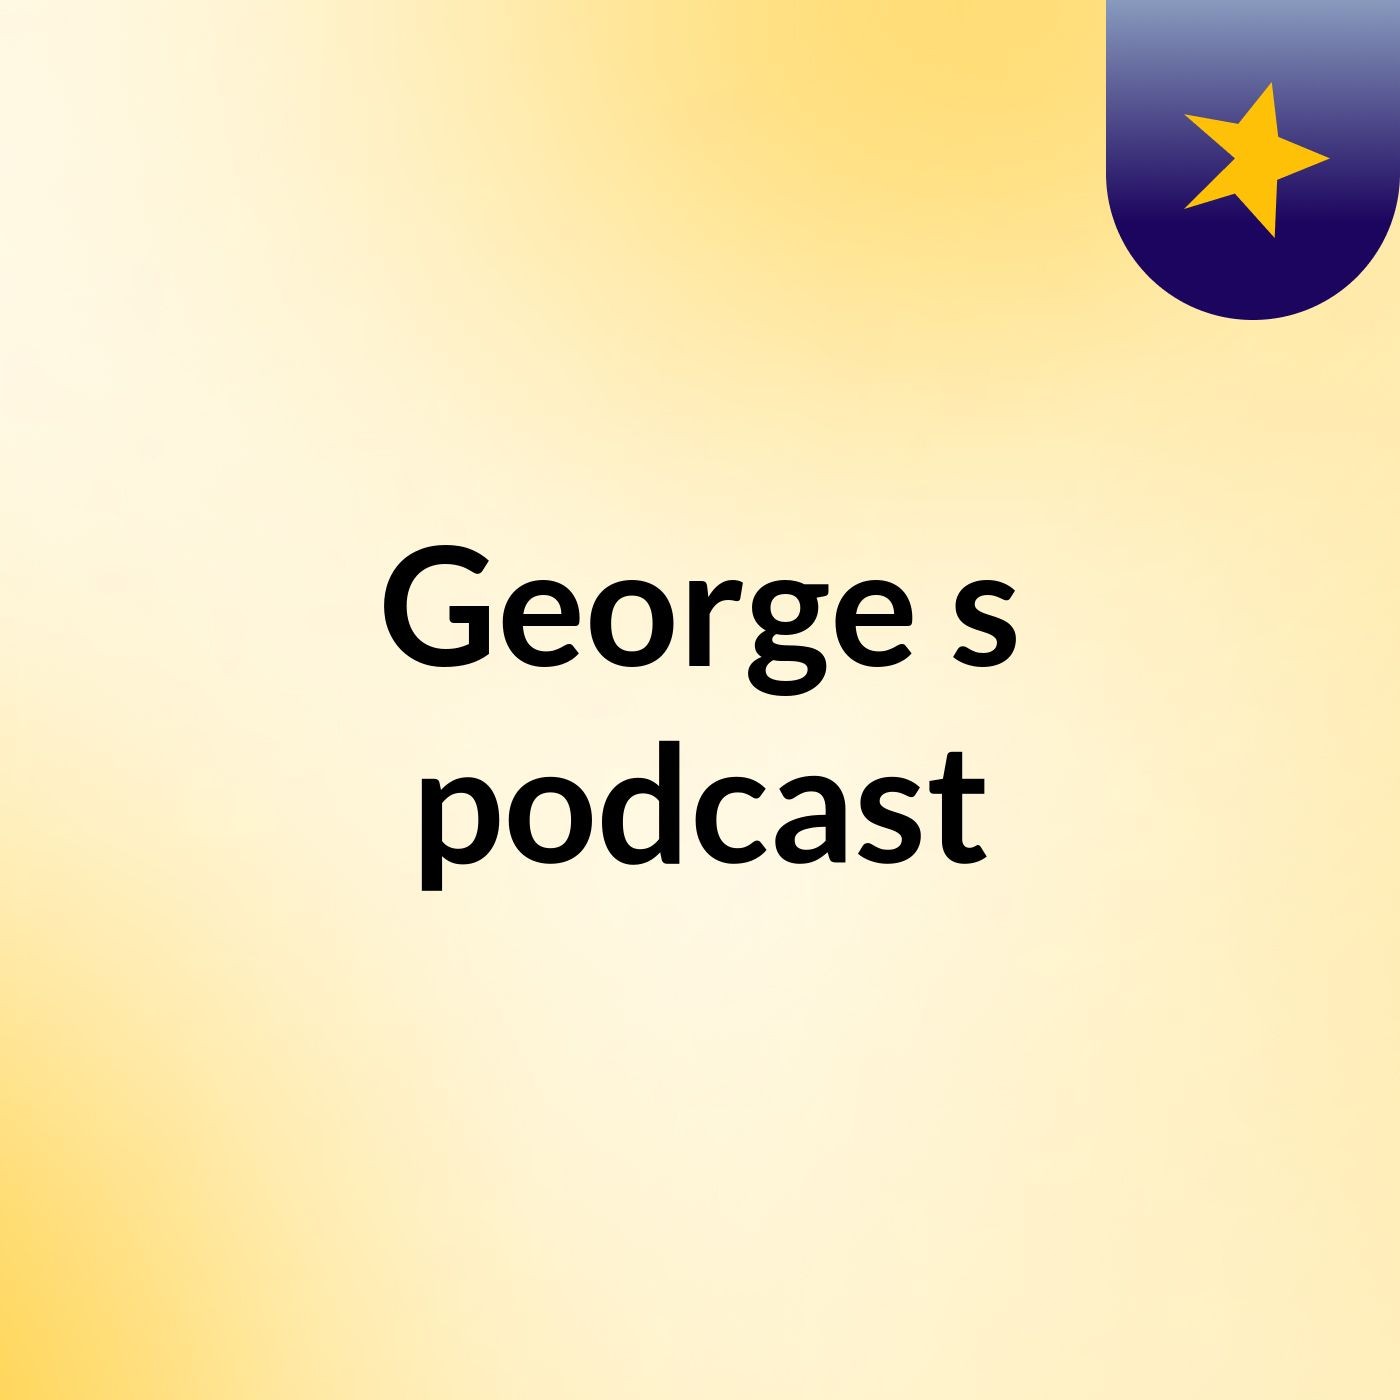 George's podcast